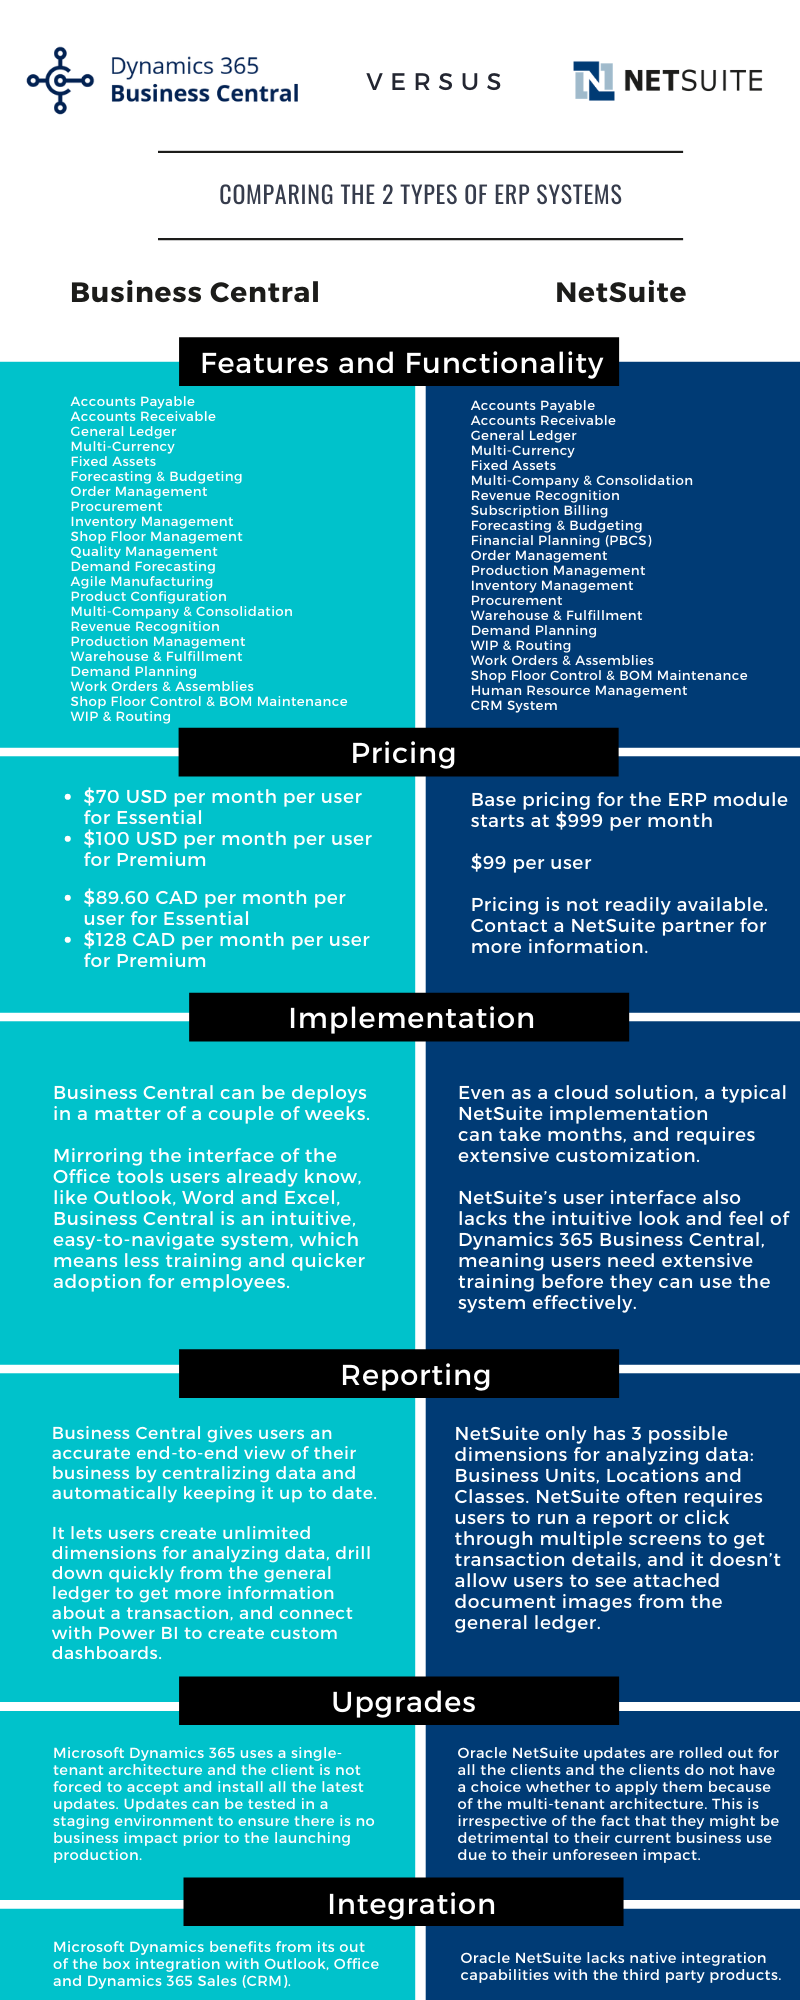 Business Central vs netsuite infographic v3